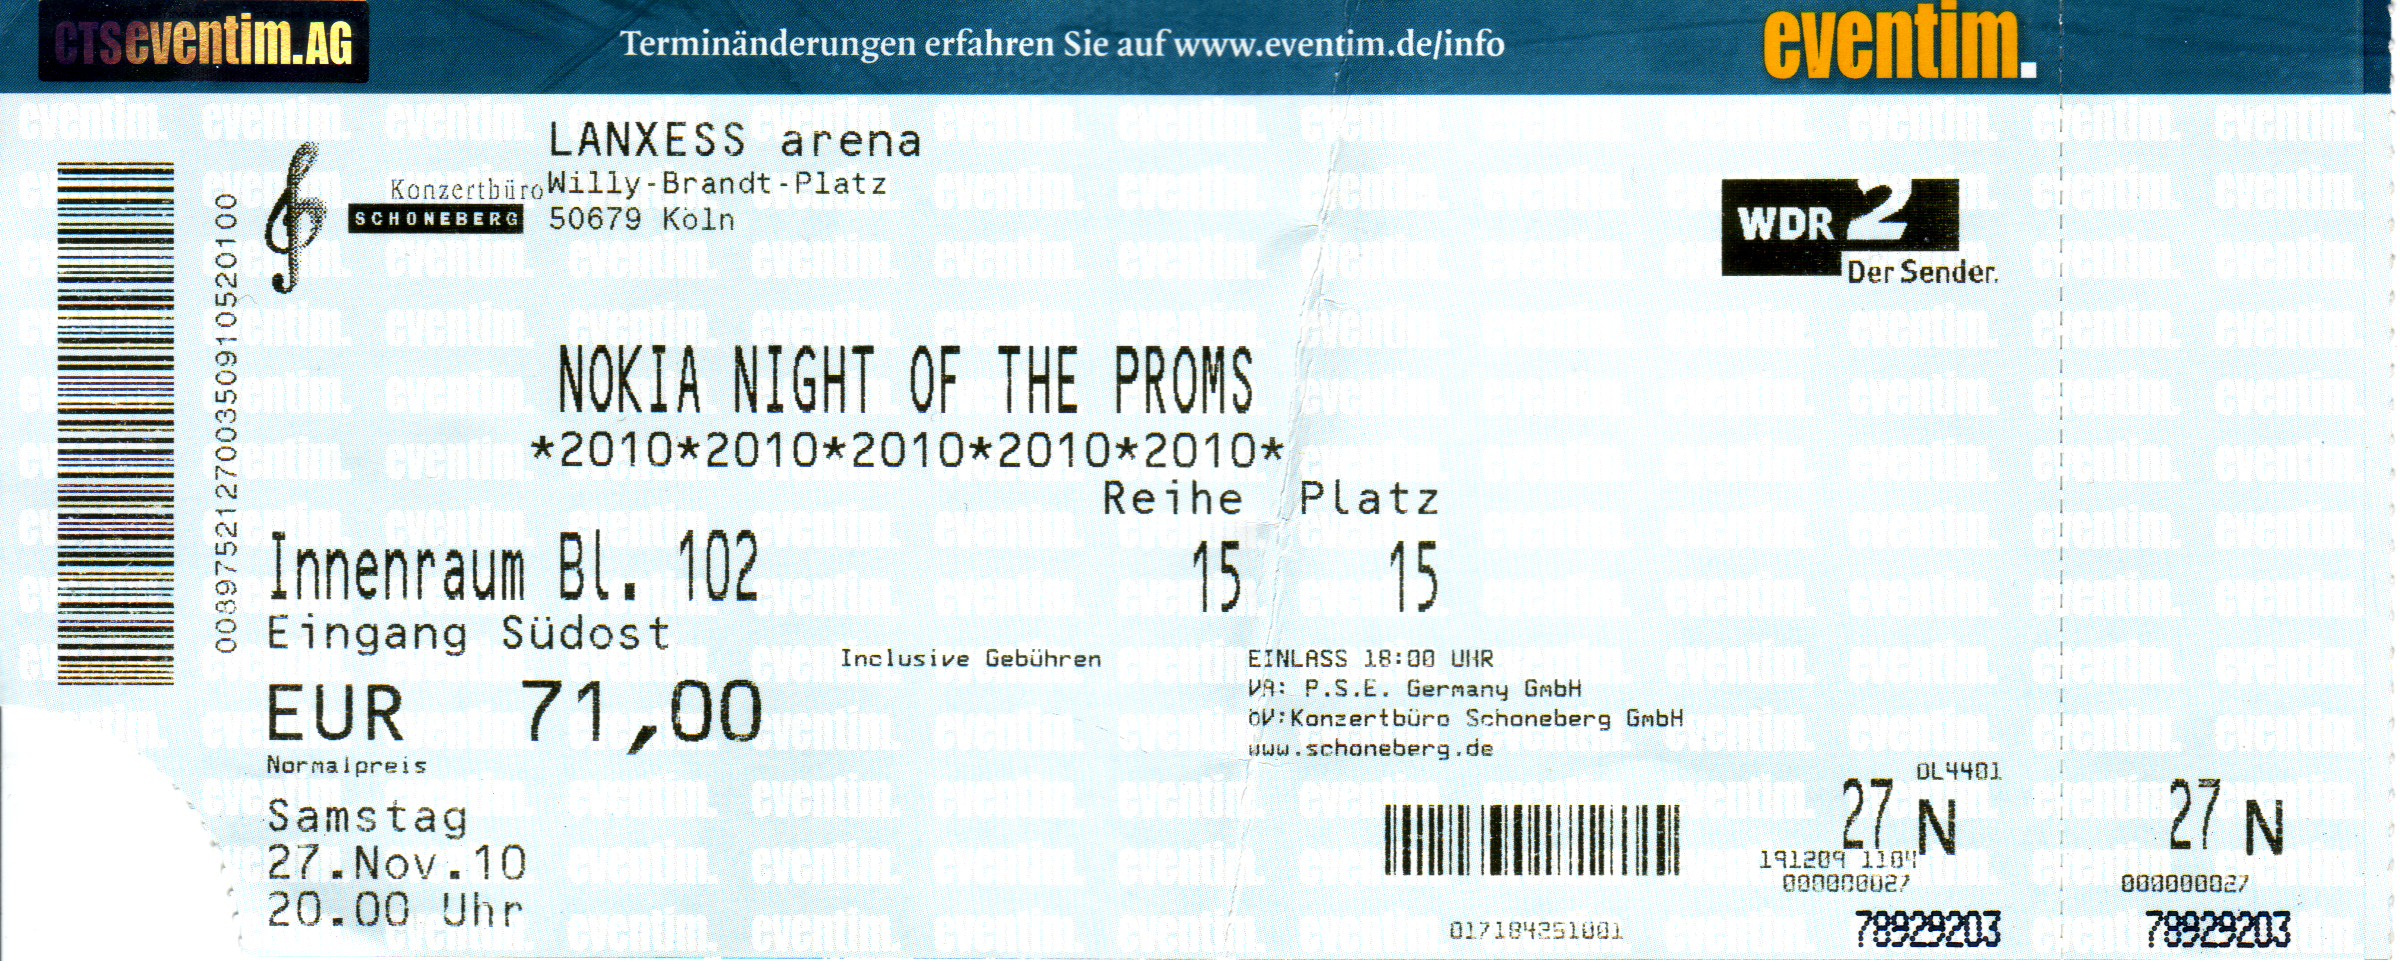 27.11.2010 – NOKIA Night of the Proms @Köln/Lanxess-Arena